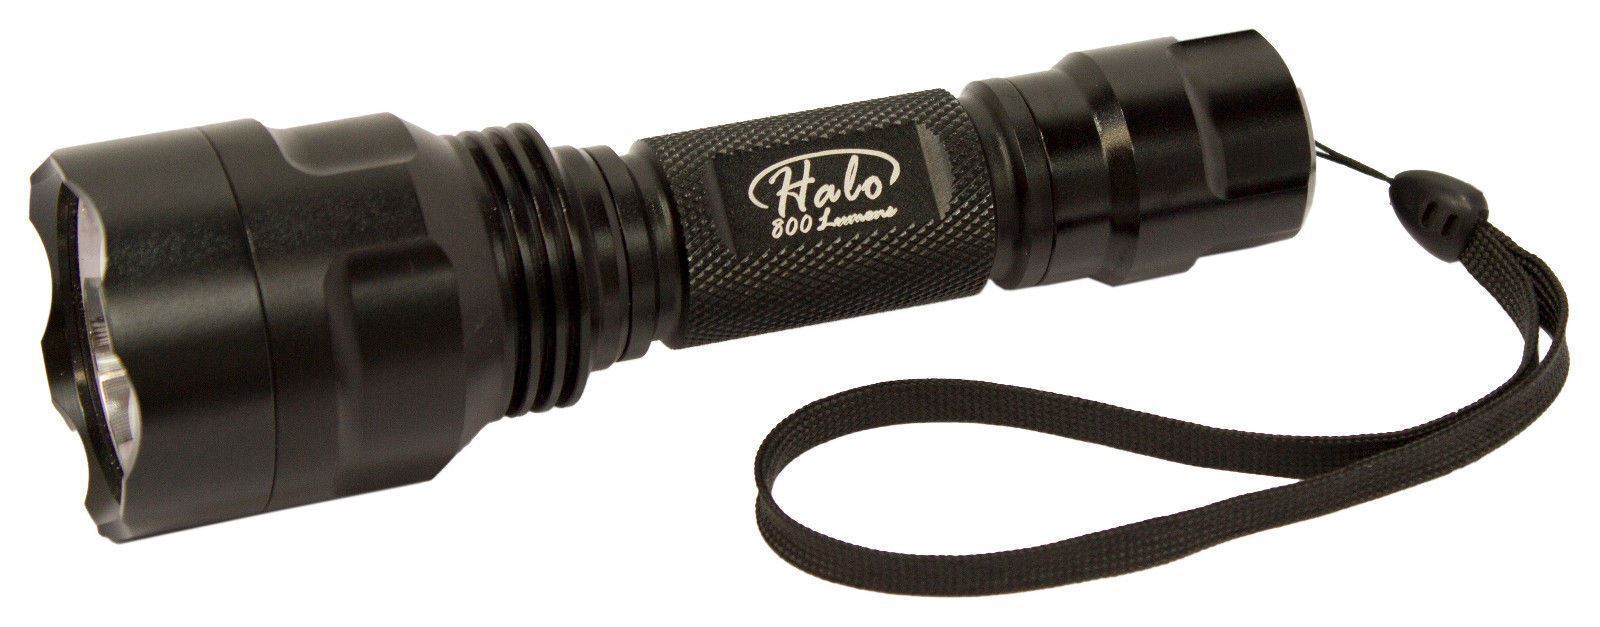 Limited Special Buy - Rigid RI-800H Flashlight 800 Lumens